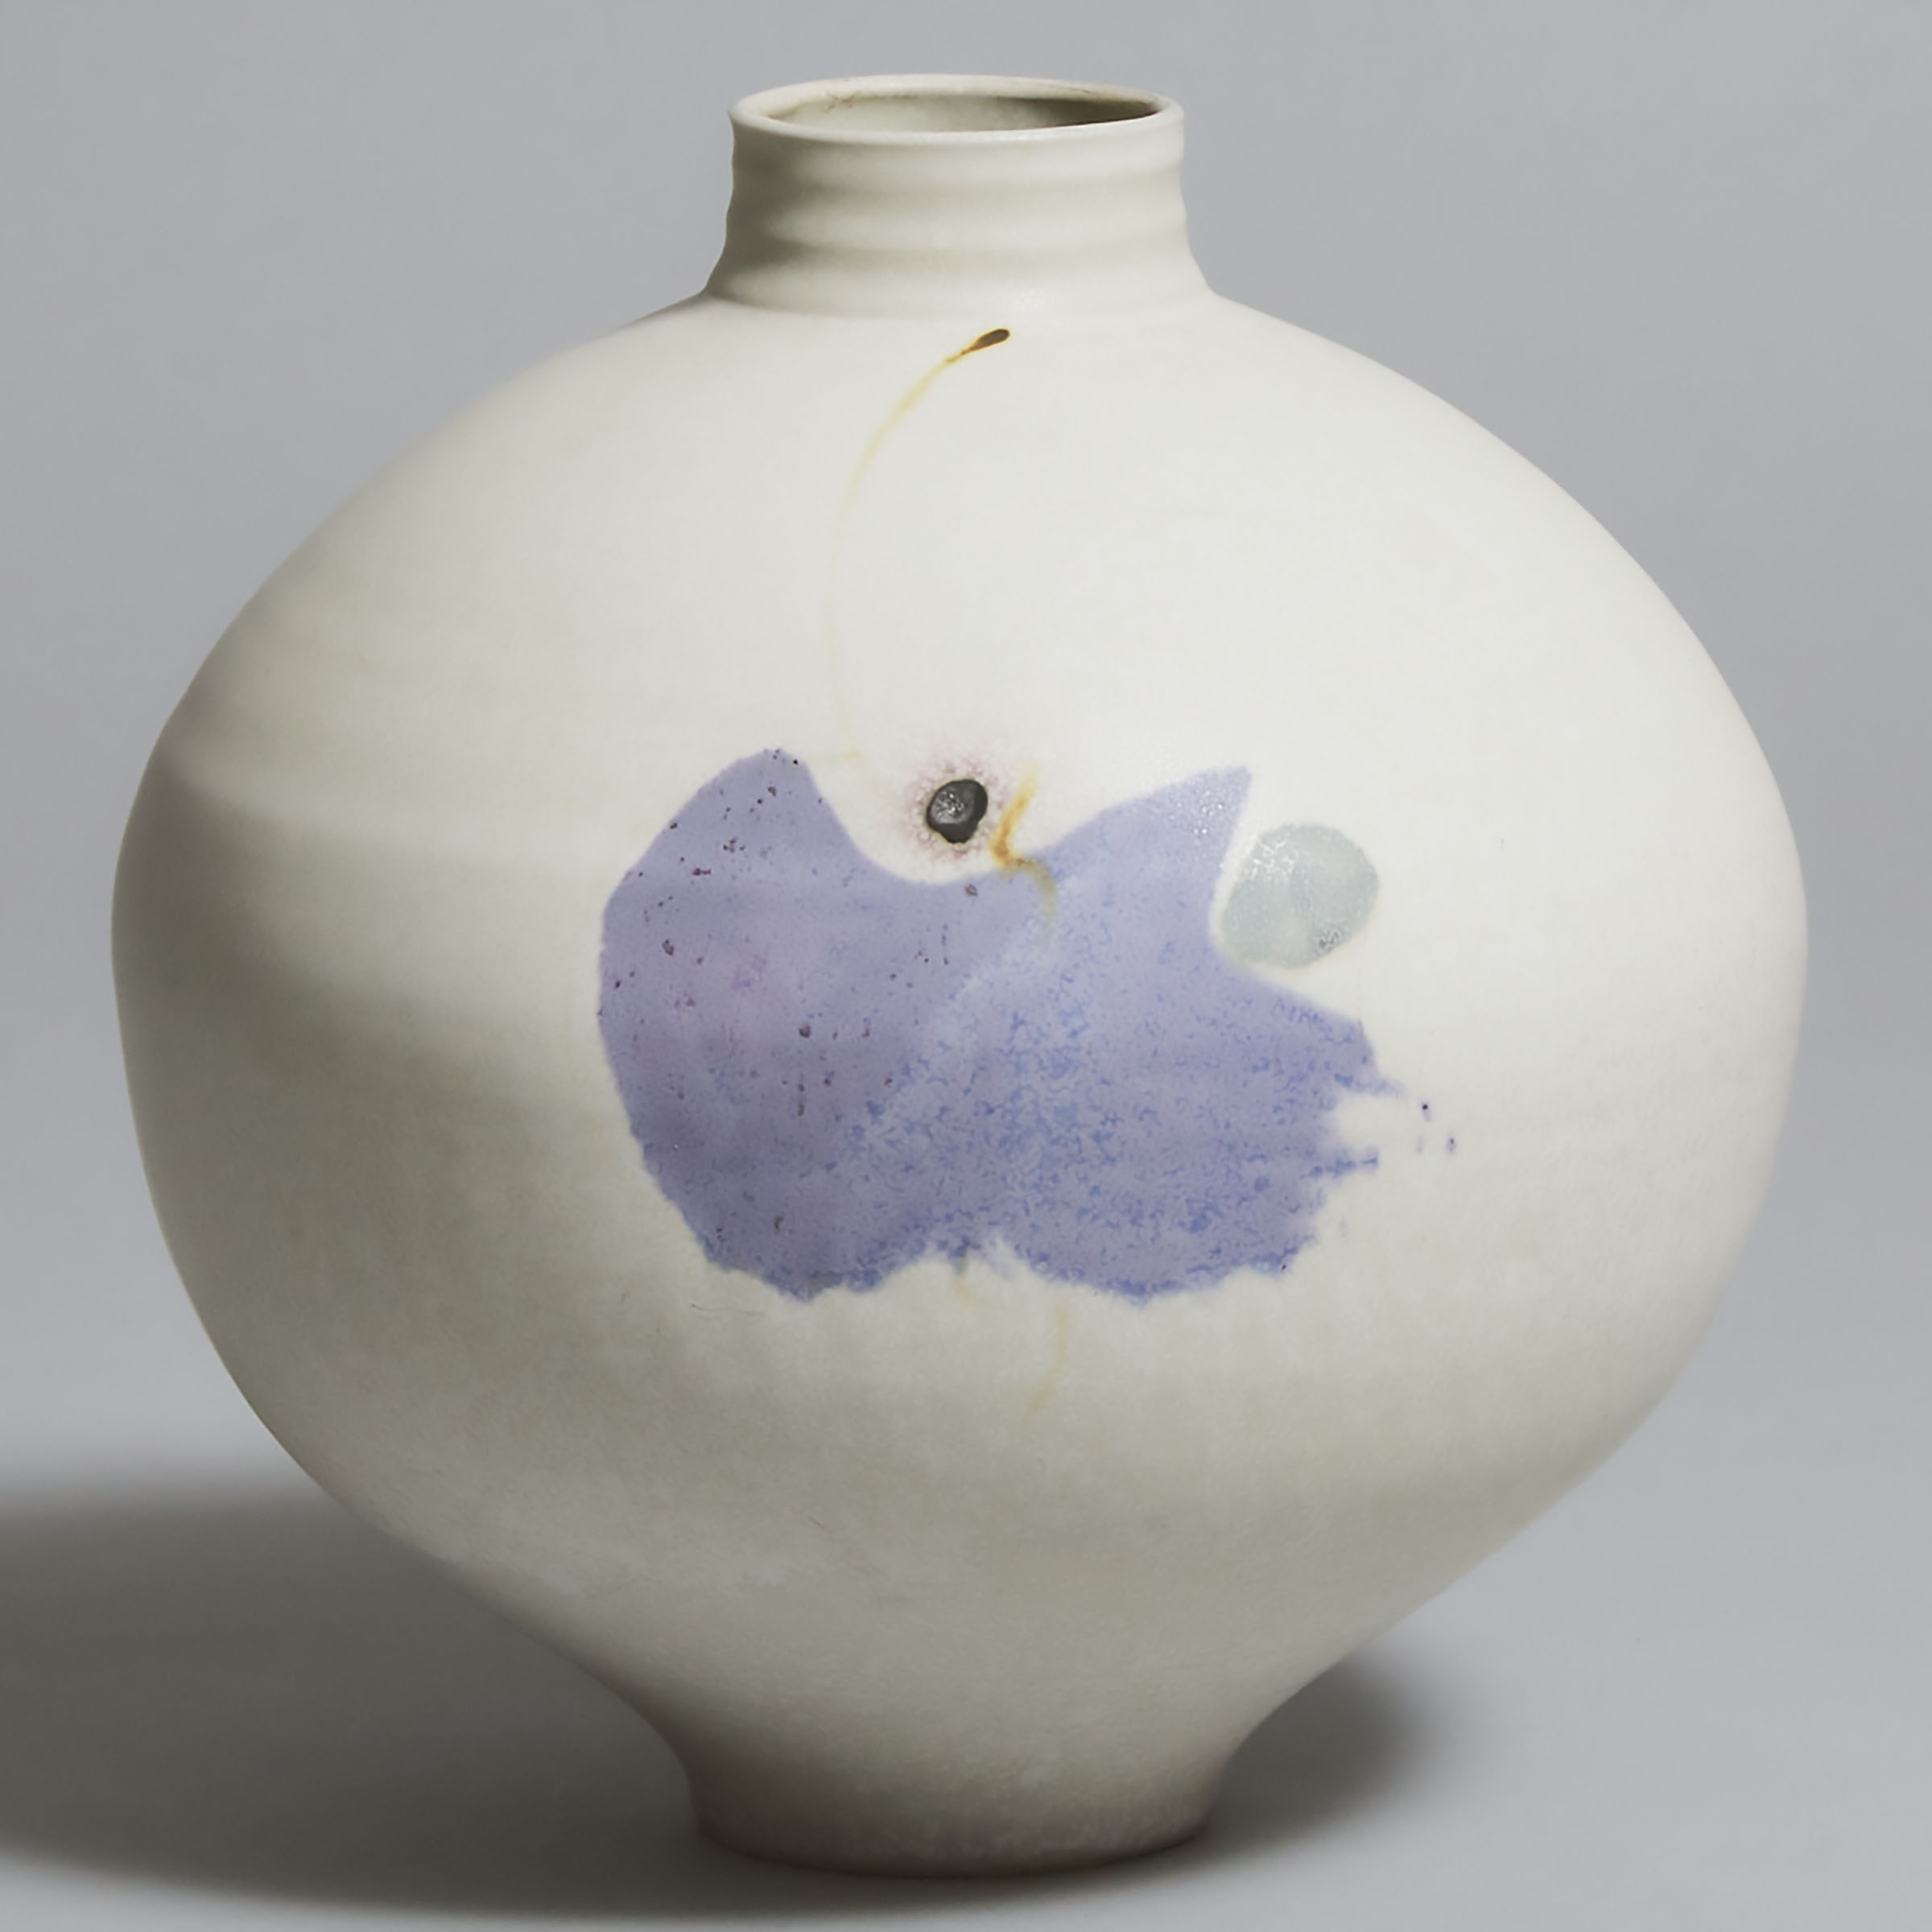 Kayo O'Young (Canadian, b.1950), Spherical Vase, 1983